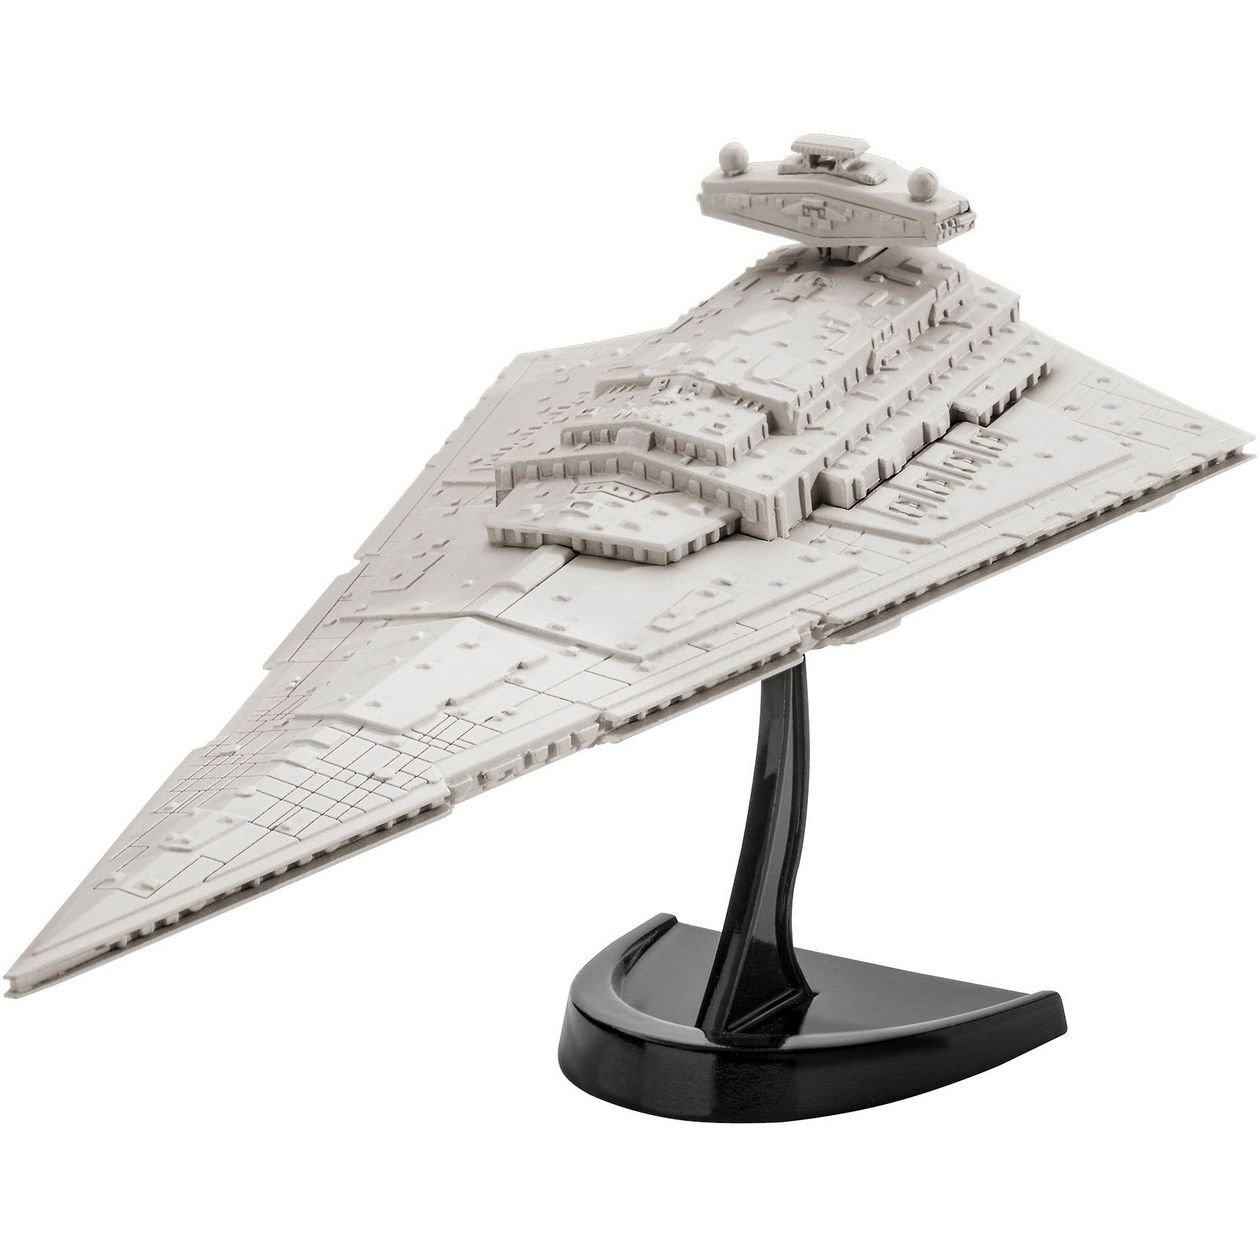 Збірна модель Revell Космічний корабель Imperial Star Destroyer, рівень 3, масштаб 1:12300, 21 деталь (RVL-03609) - фото 3